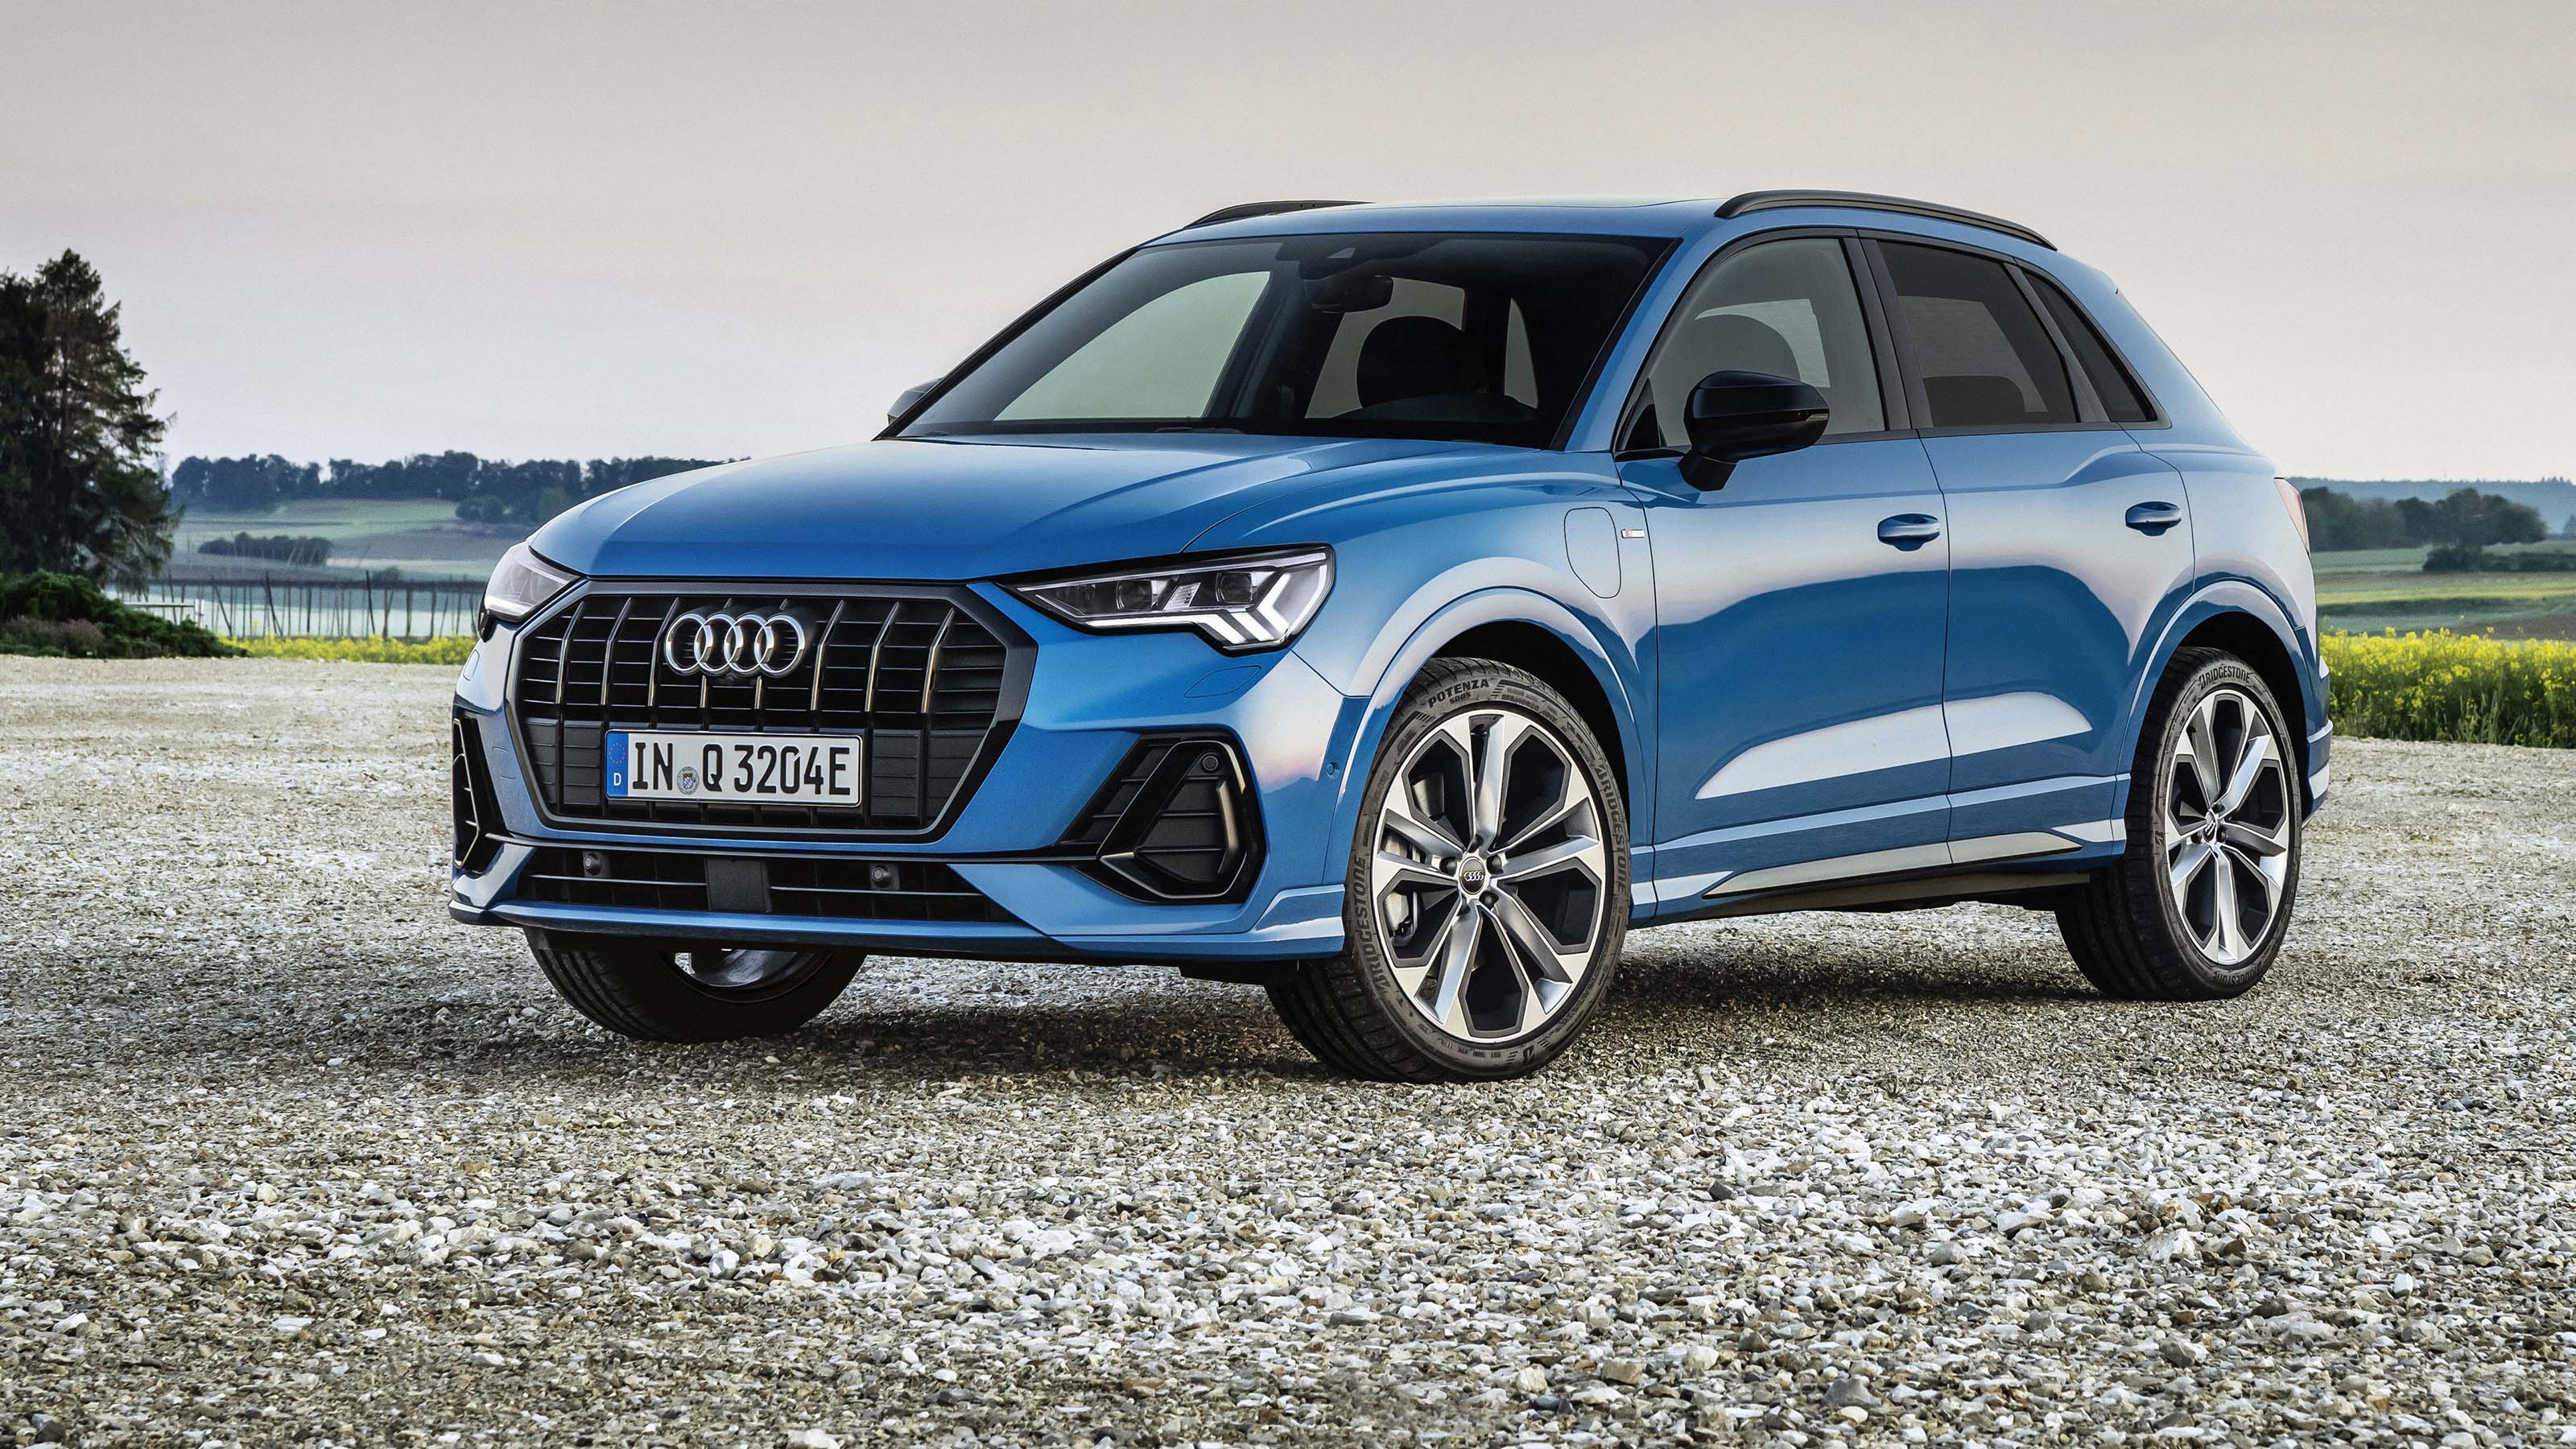 Audi Q3 plugin hybrid details, specs and release date DrivingElectric